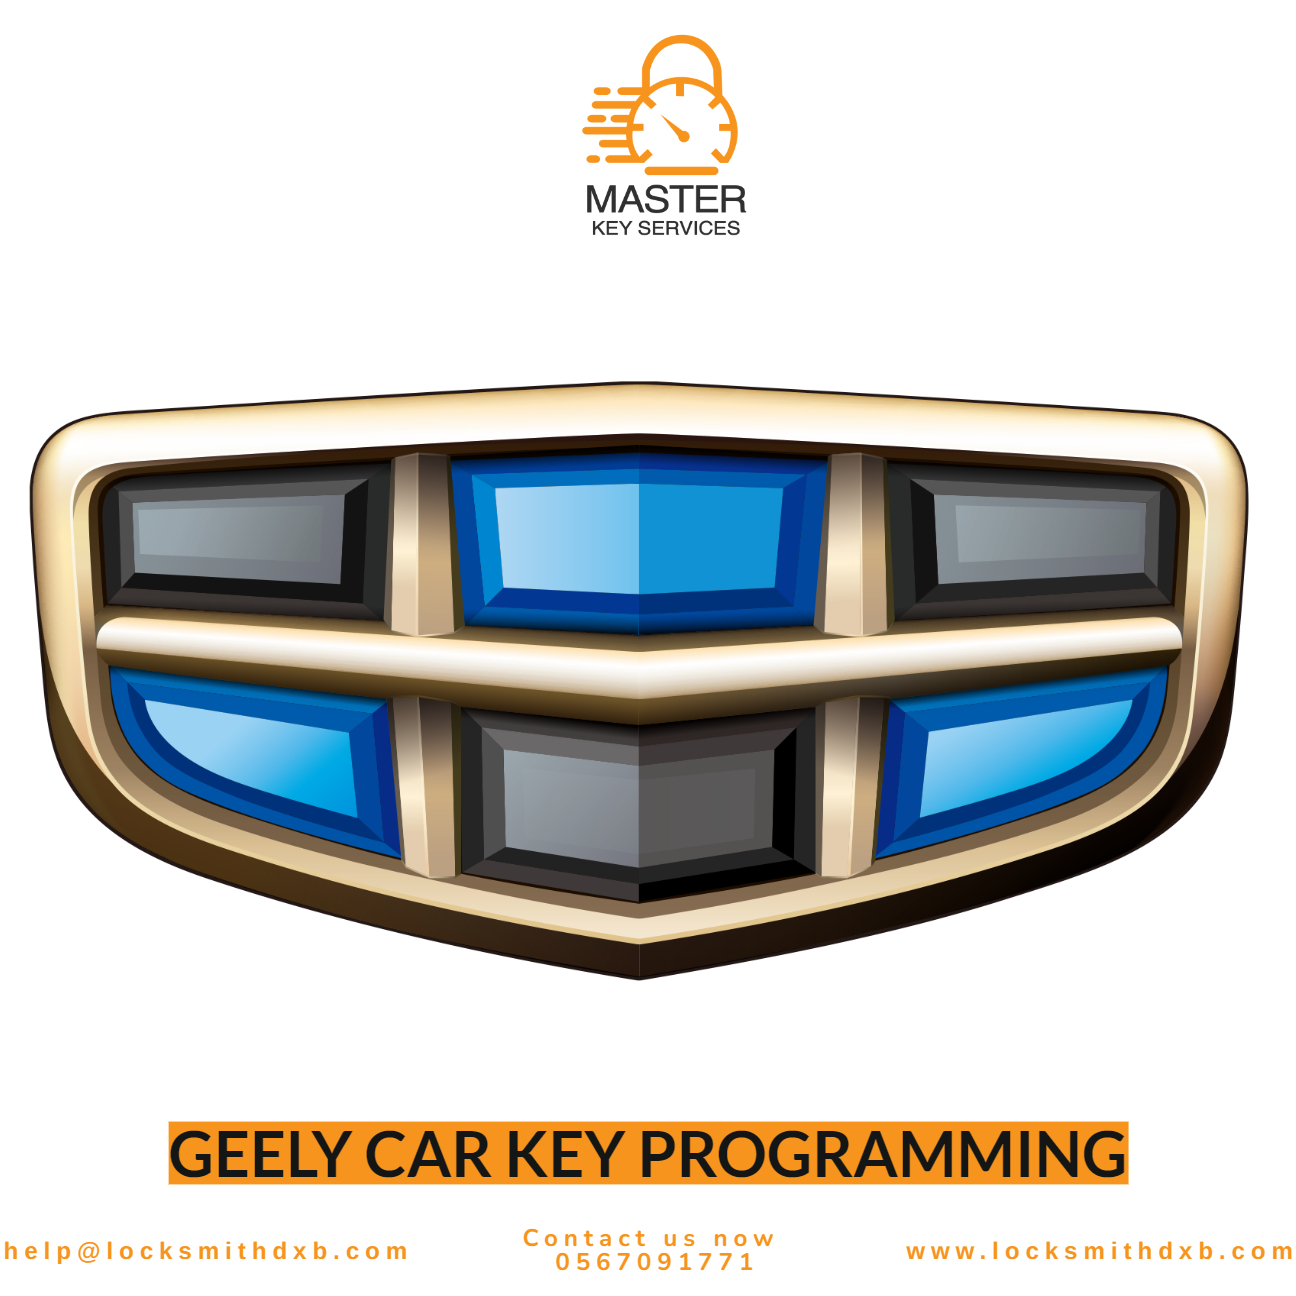 GEELY car key programming